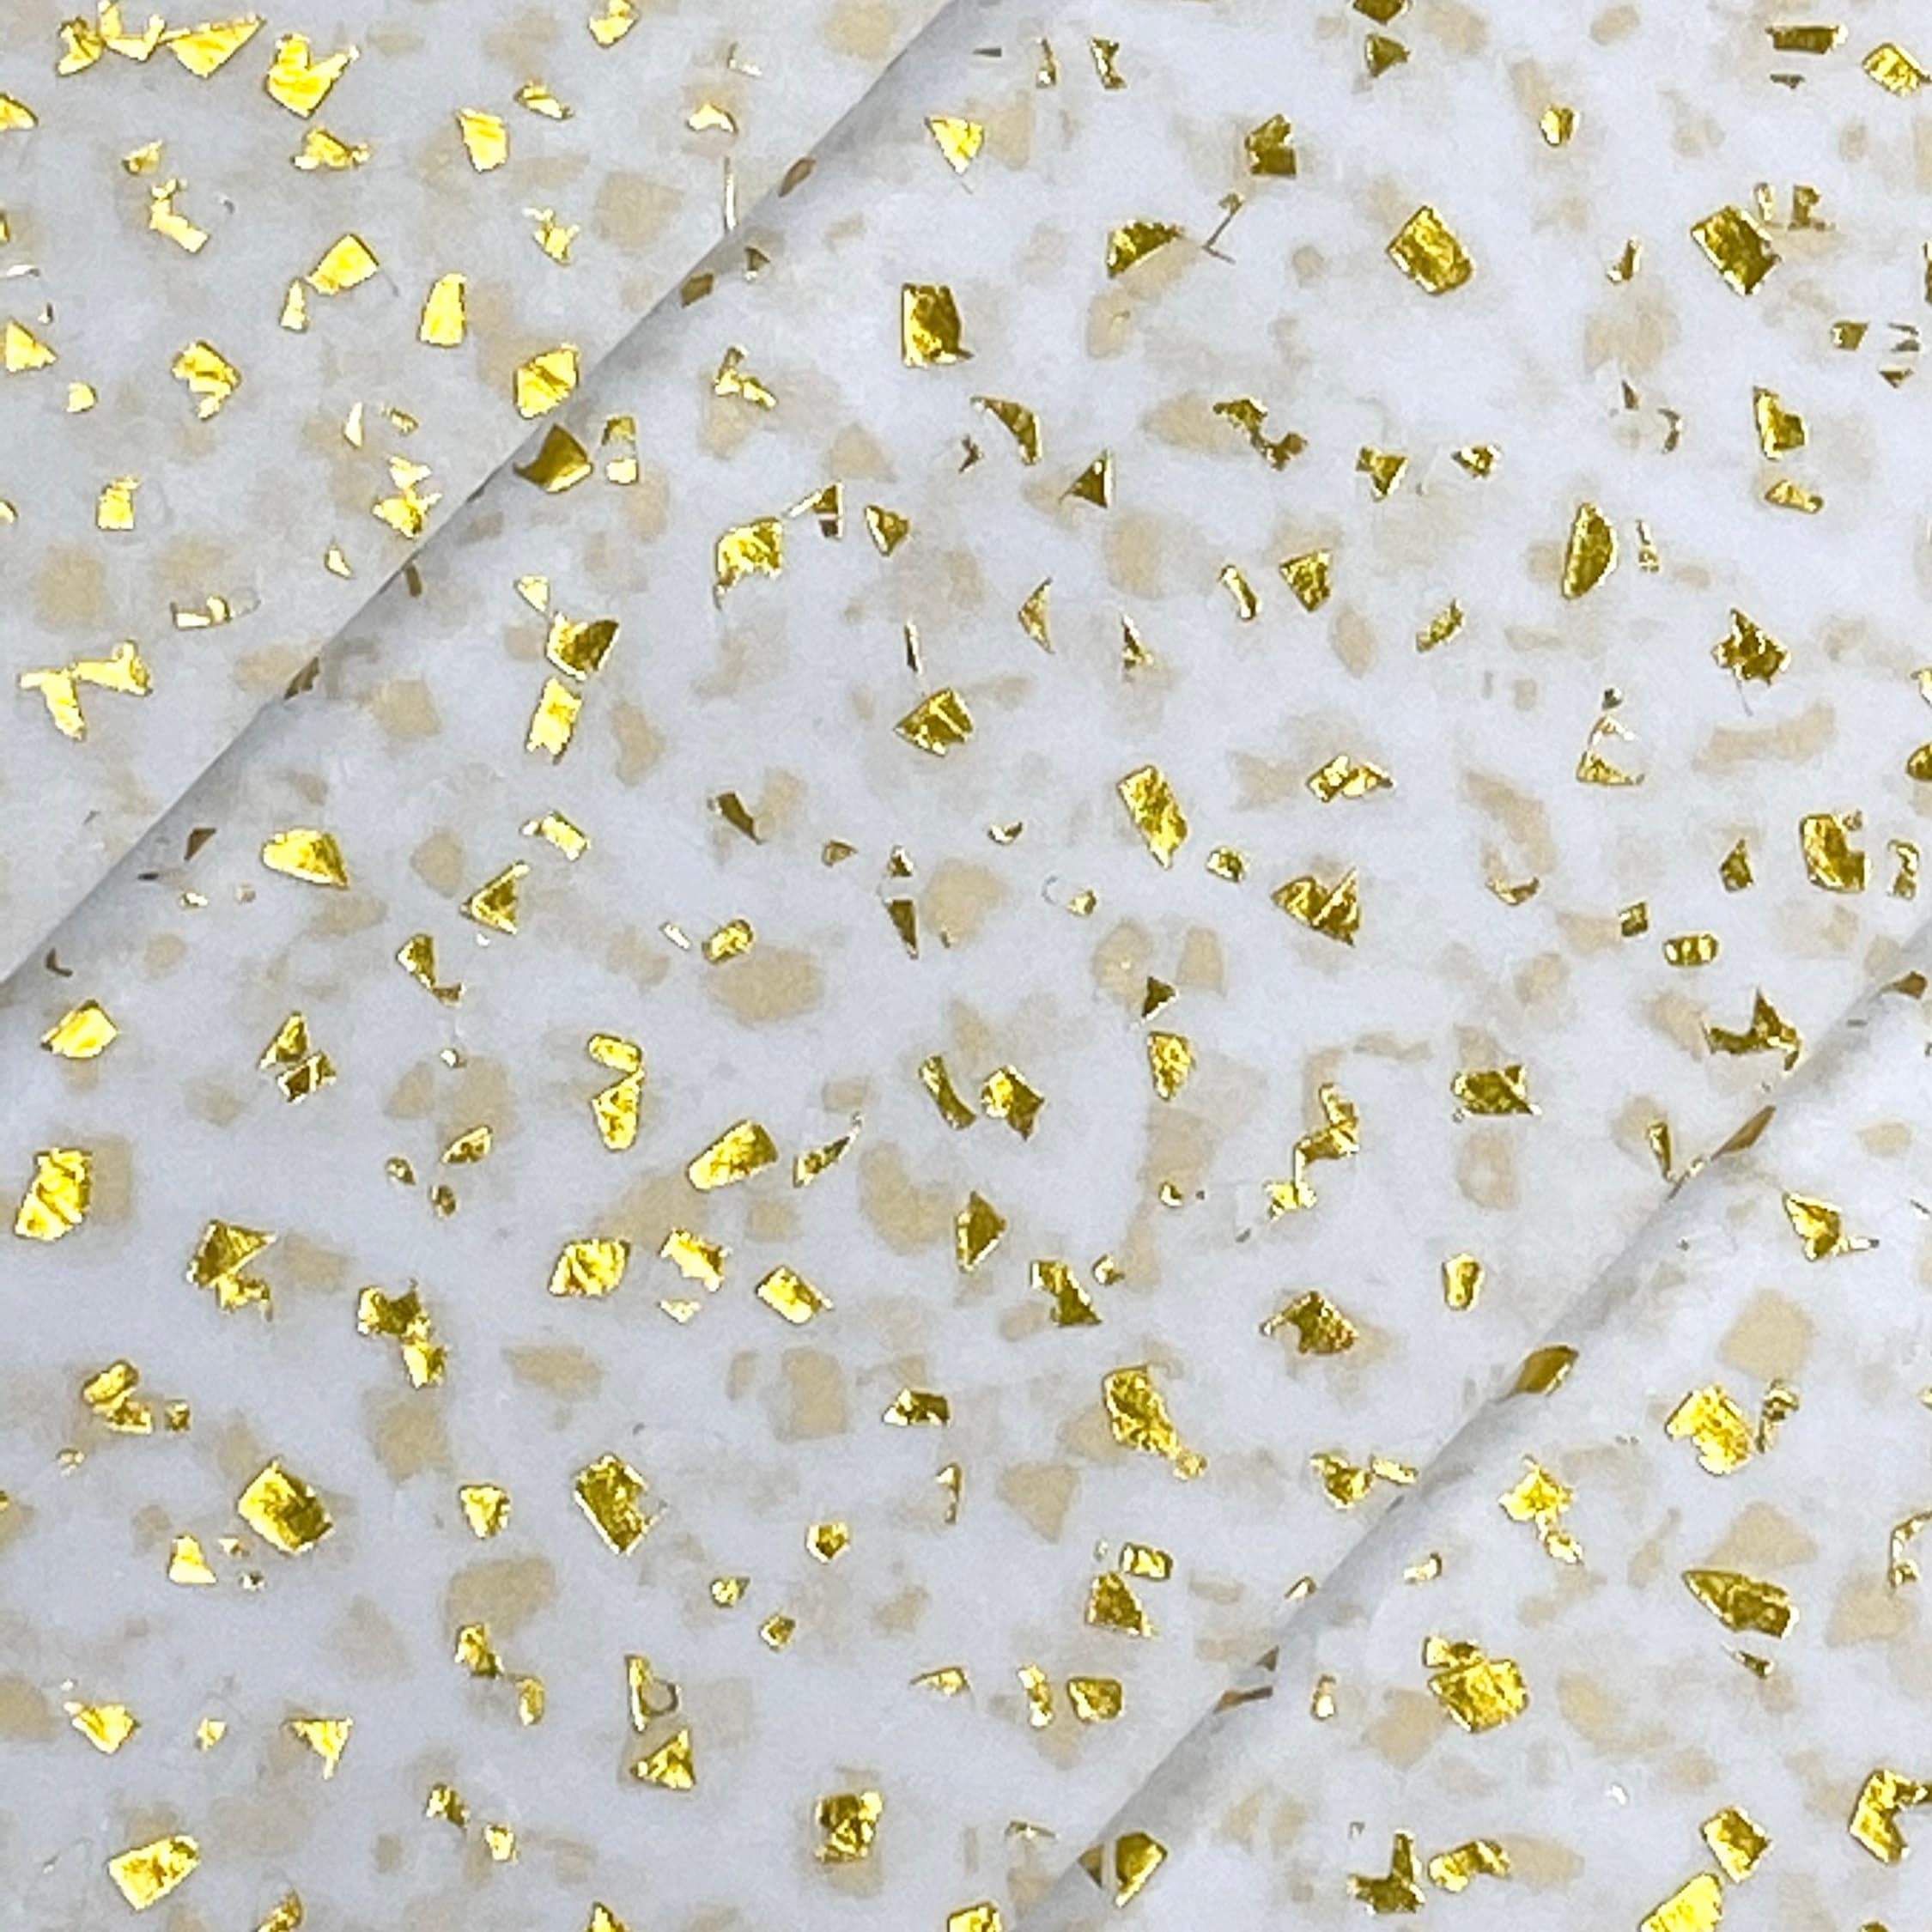 InsideMyNest Rainbow Metallic Foil Specks Glitter On White Tissue Paper  Sheets 30x20 inches (20)